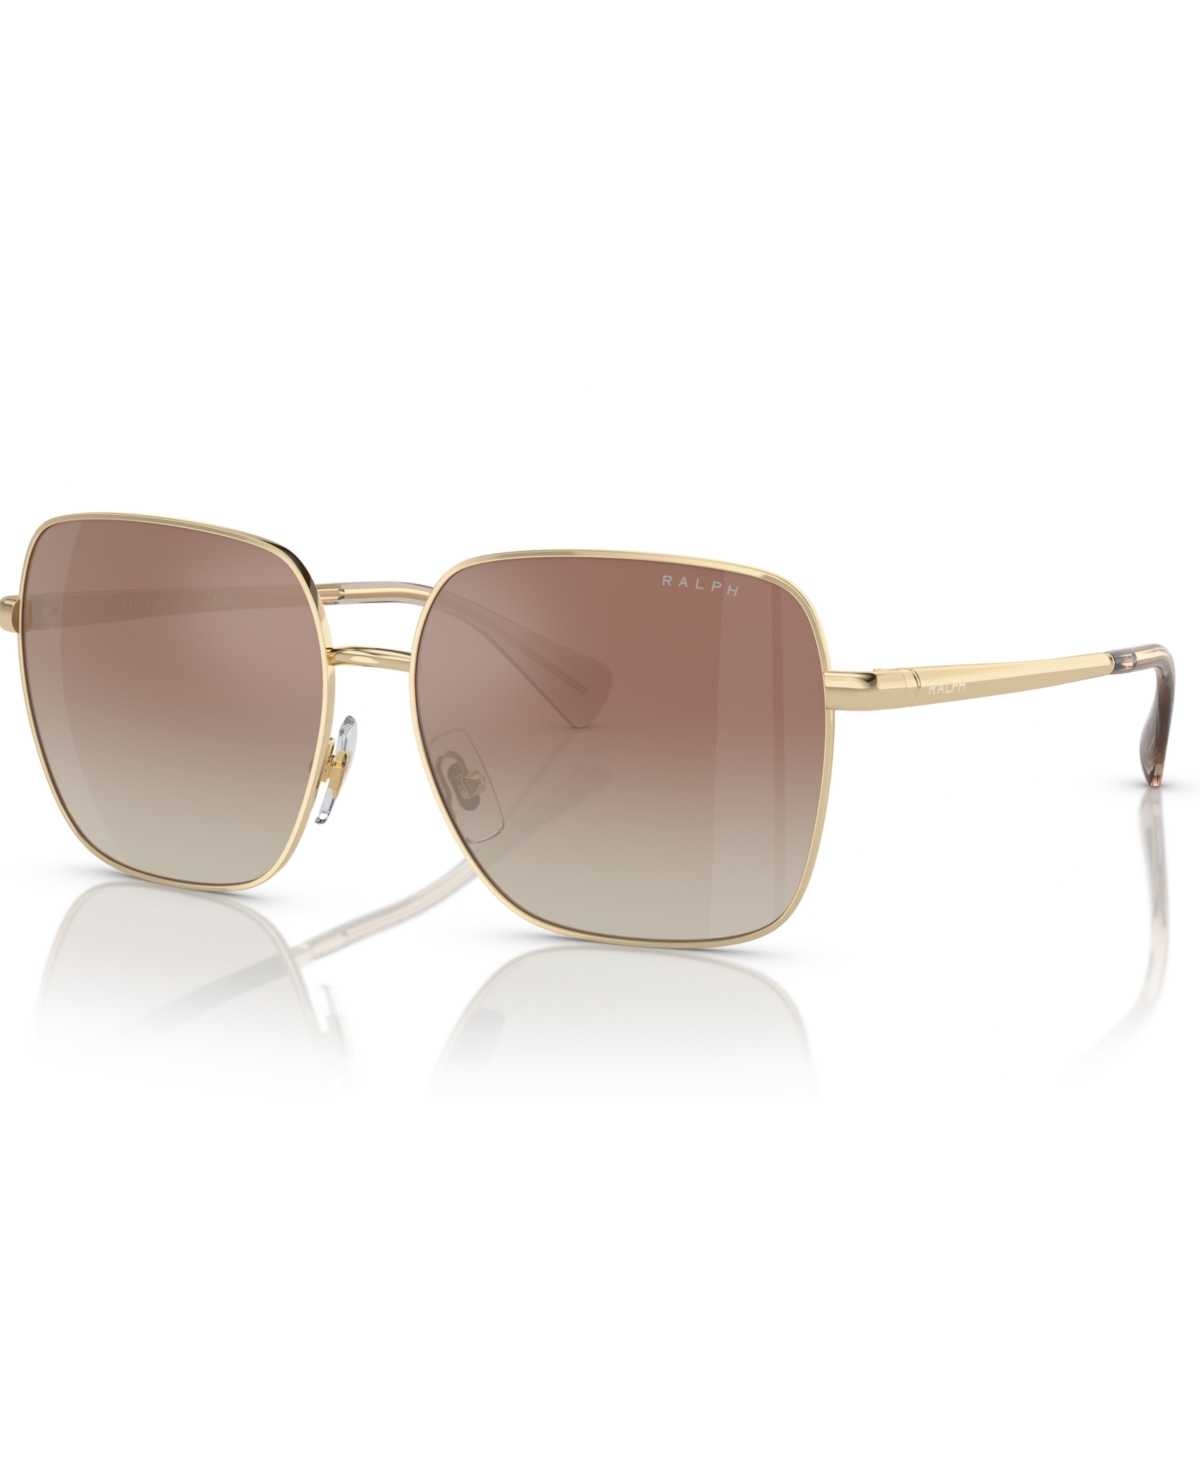 Women's Sunglasses, Mirror Gradient RA4142 - Shiny Pale Gold